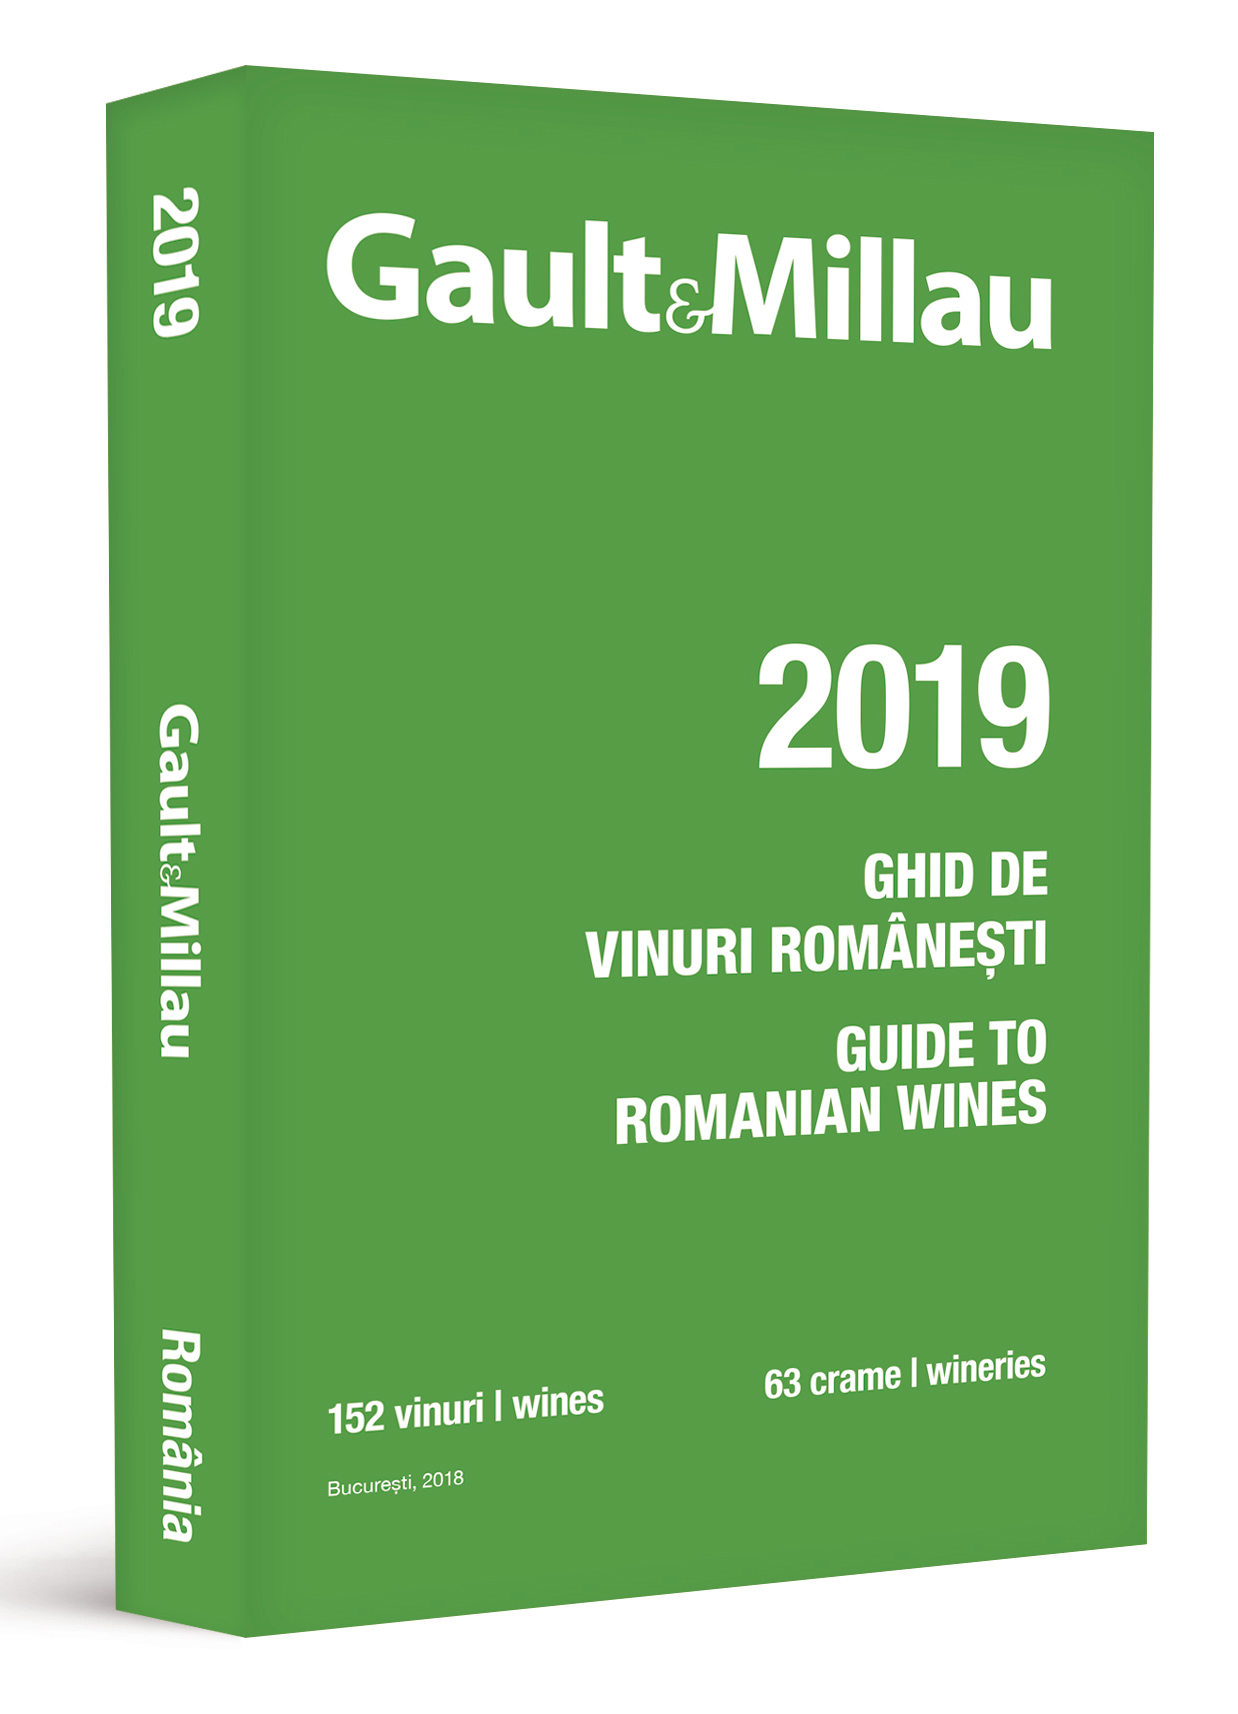 Ghidul Gault&Millau – Ghidul vinurilor romanesti 2019 | carturesti.ro poza bestsellers.ro